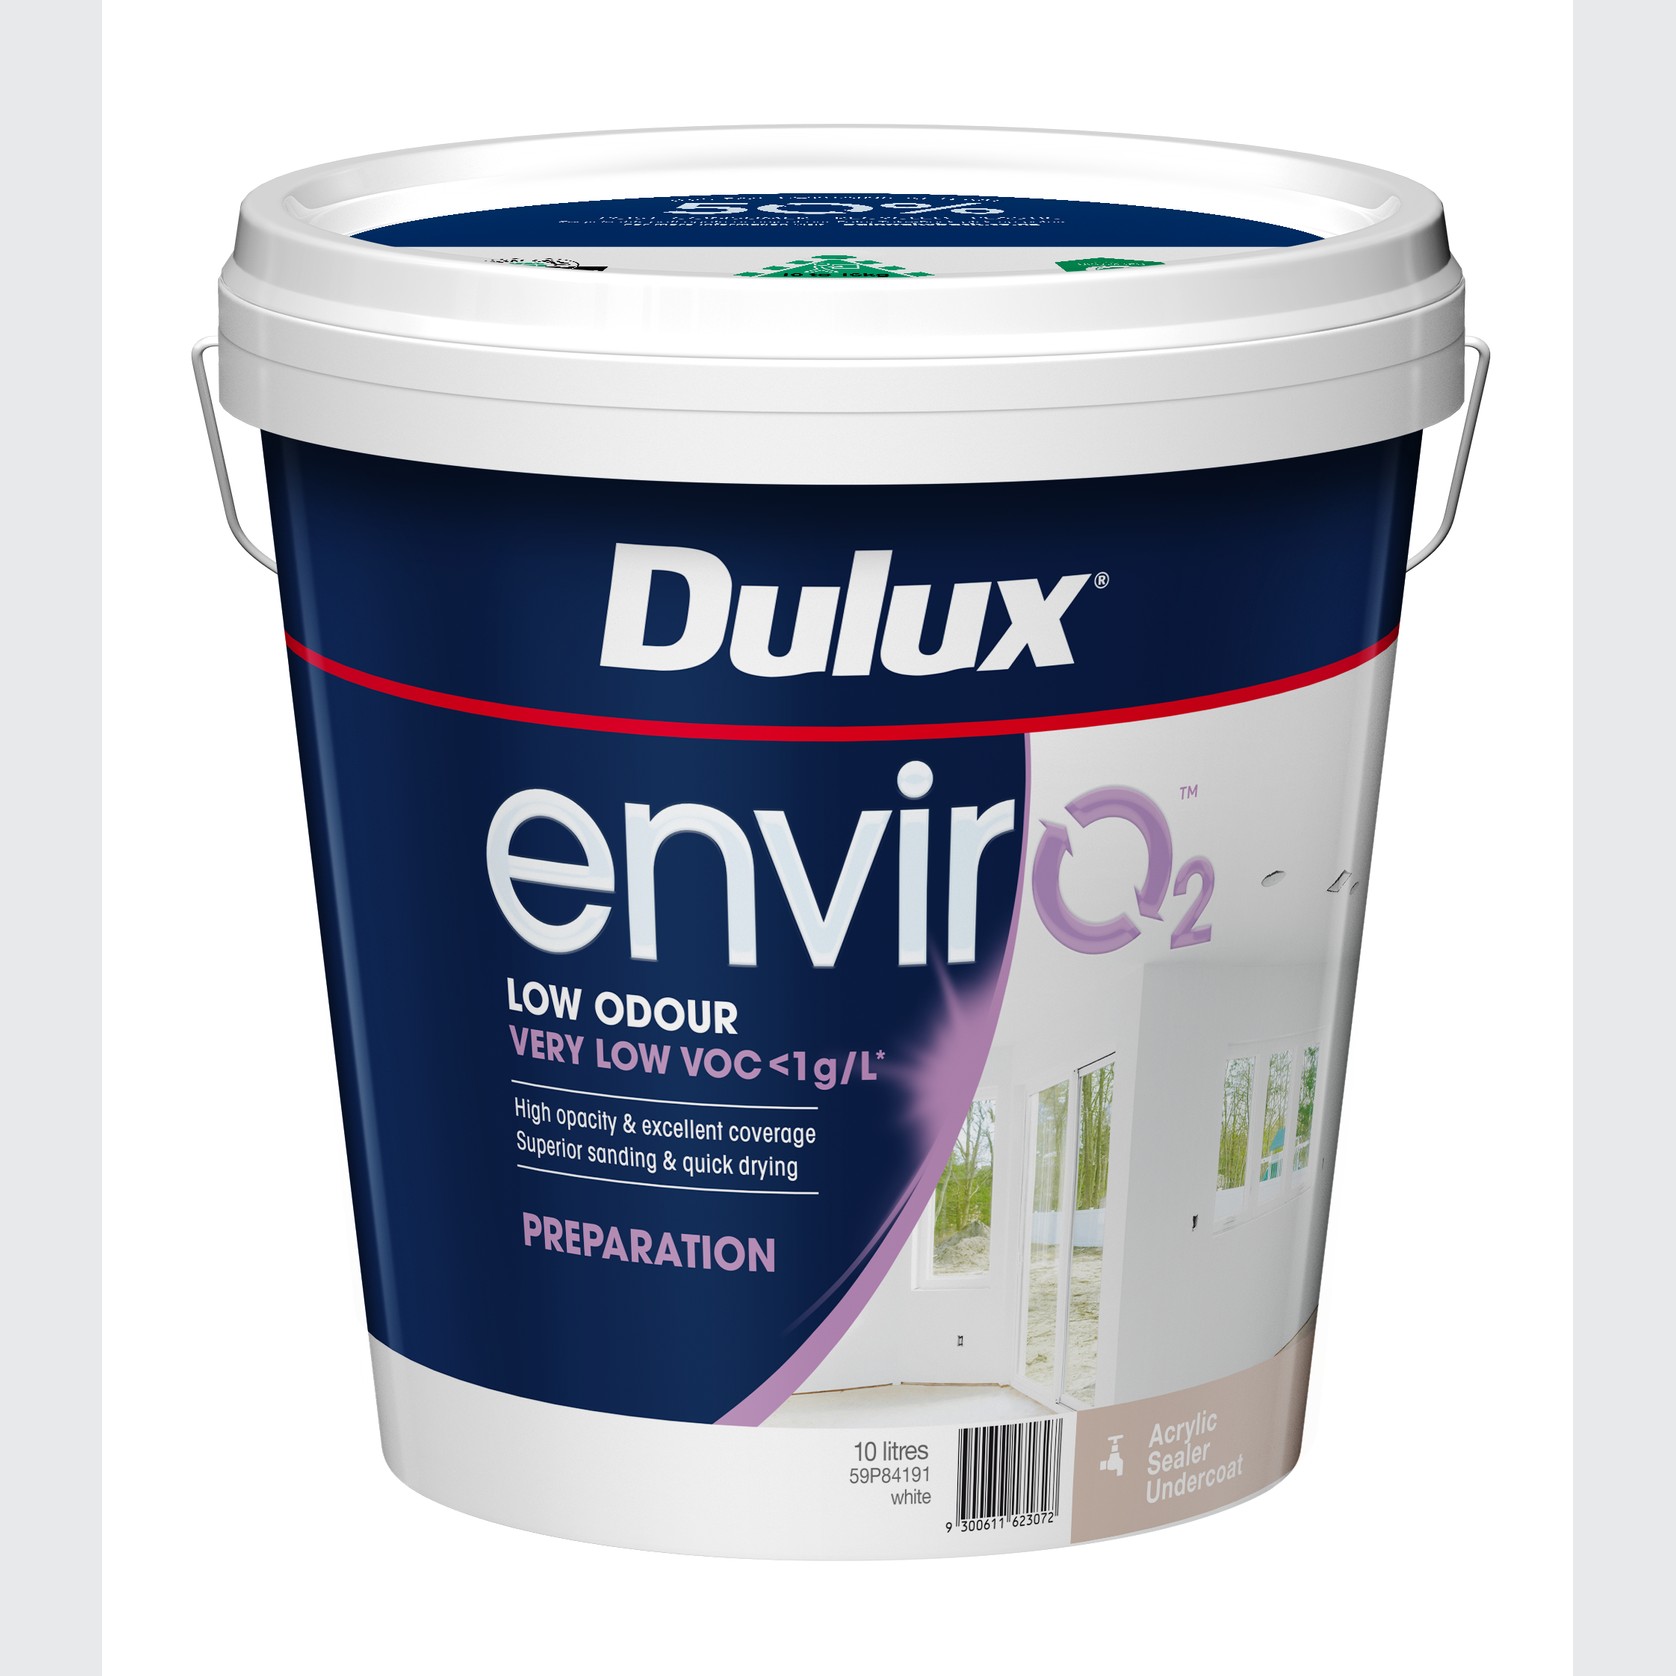 Dulux envirO2 - Acrylic Sealer Undercoat gallery detail image